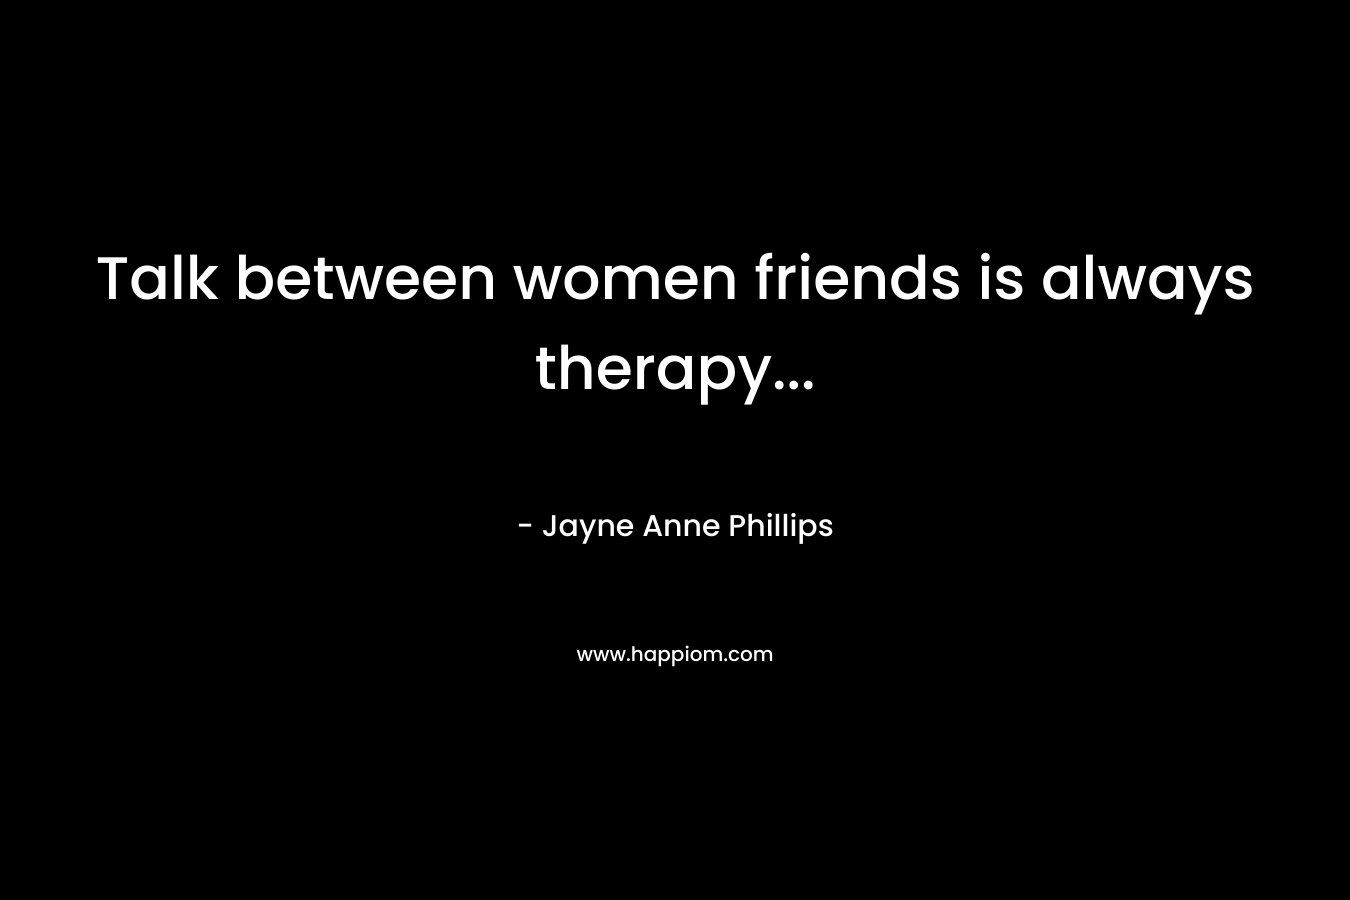 Talk between women friends is always therapy...